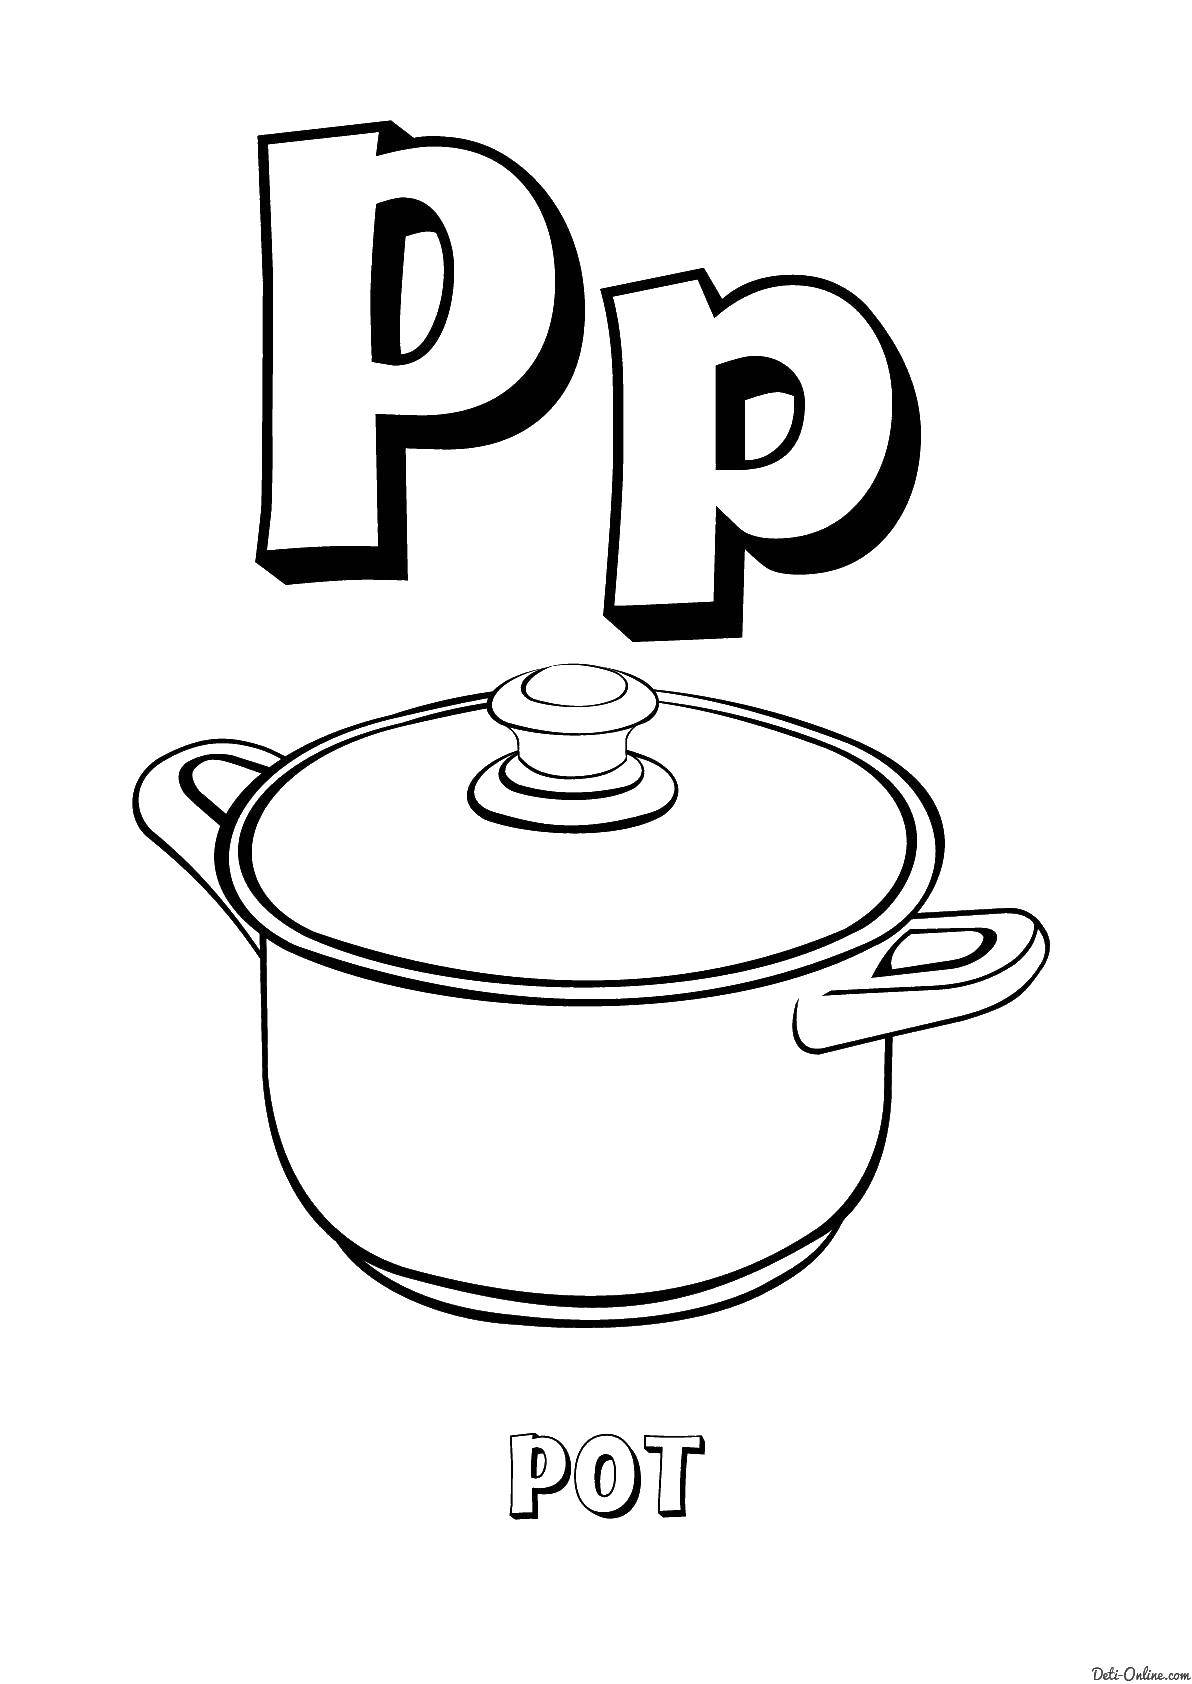 Coloring Pot. Category English. Tags:  Pot, letter P, pan m, English.